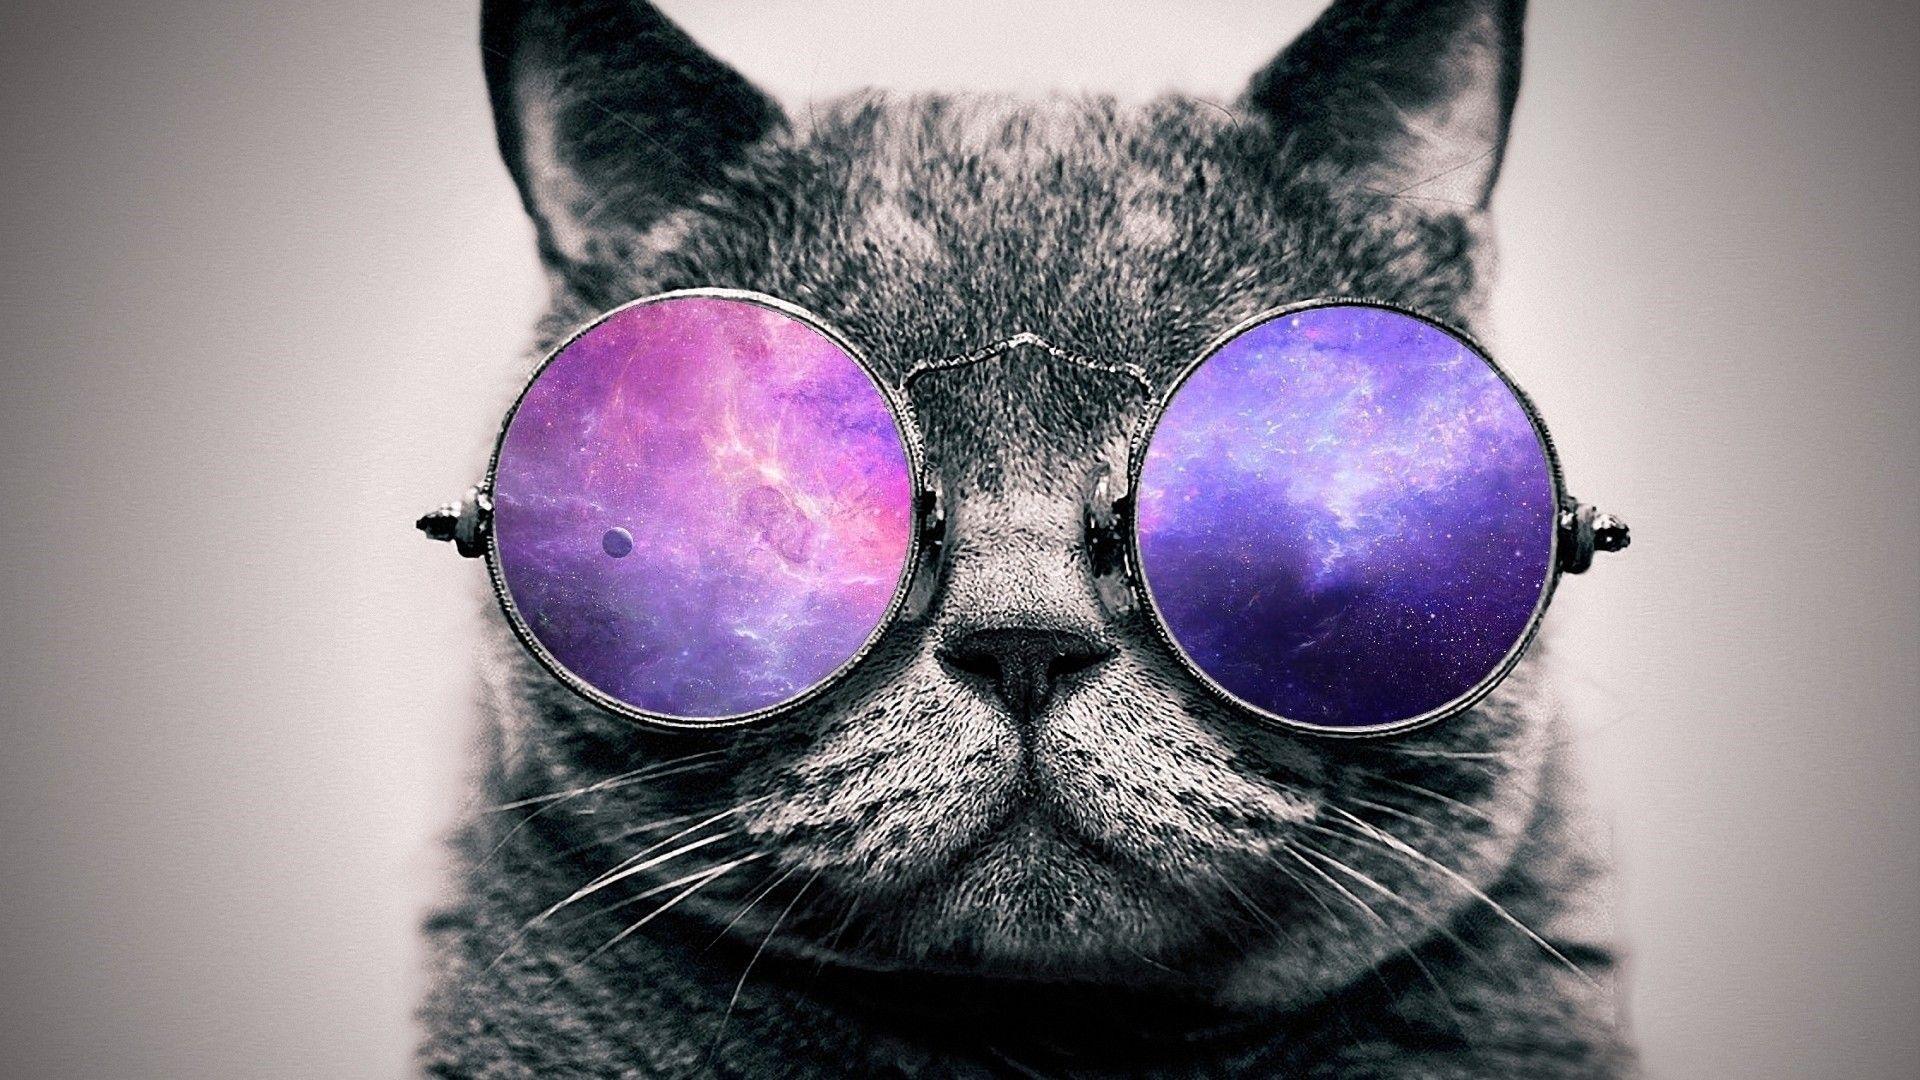 Cat With Sunglasses Wallpaper. (54++ Wallpaper)